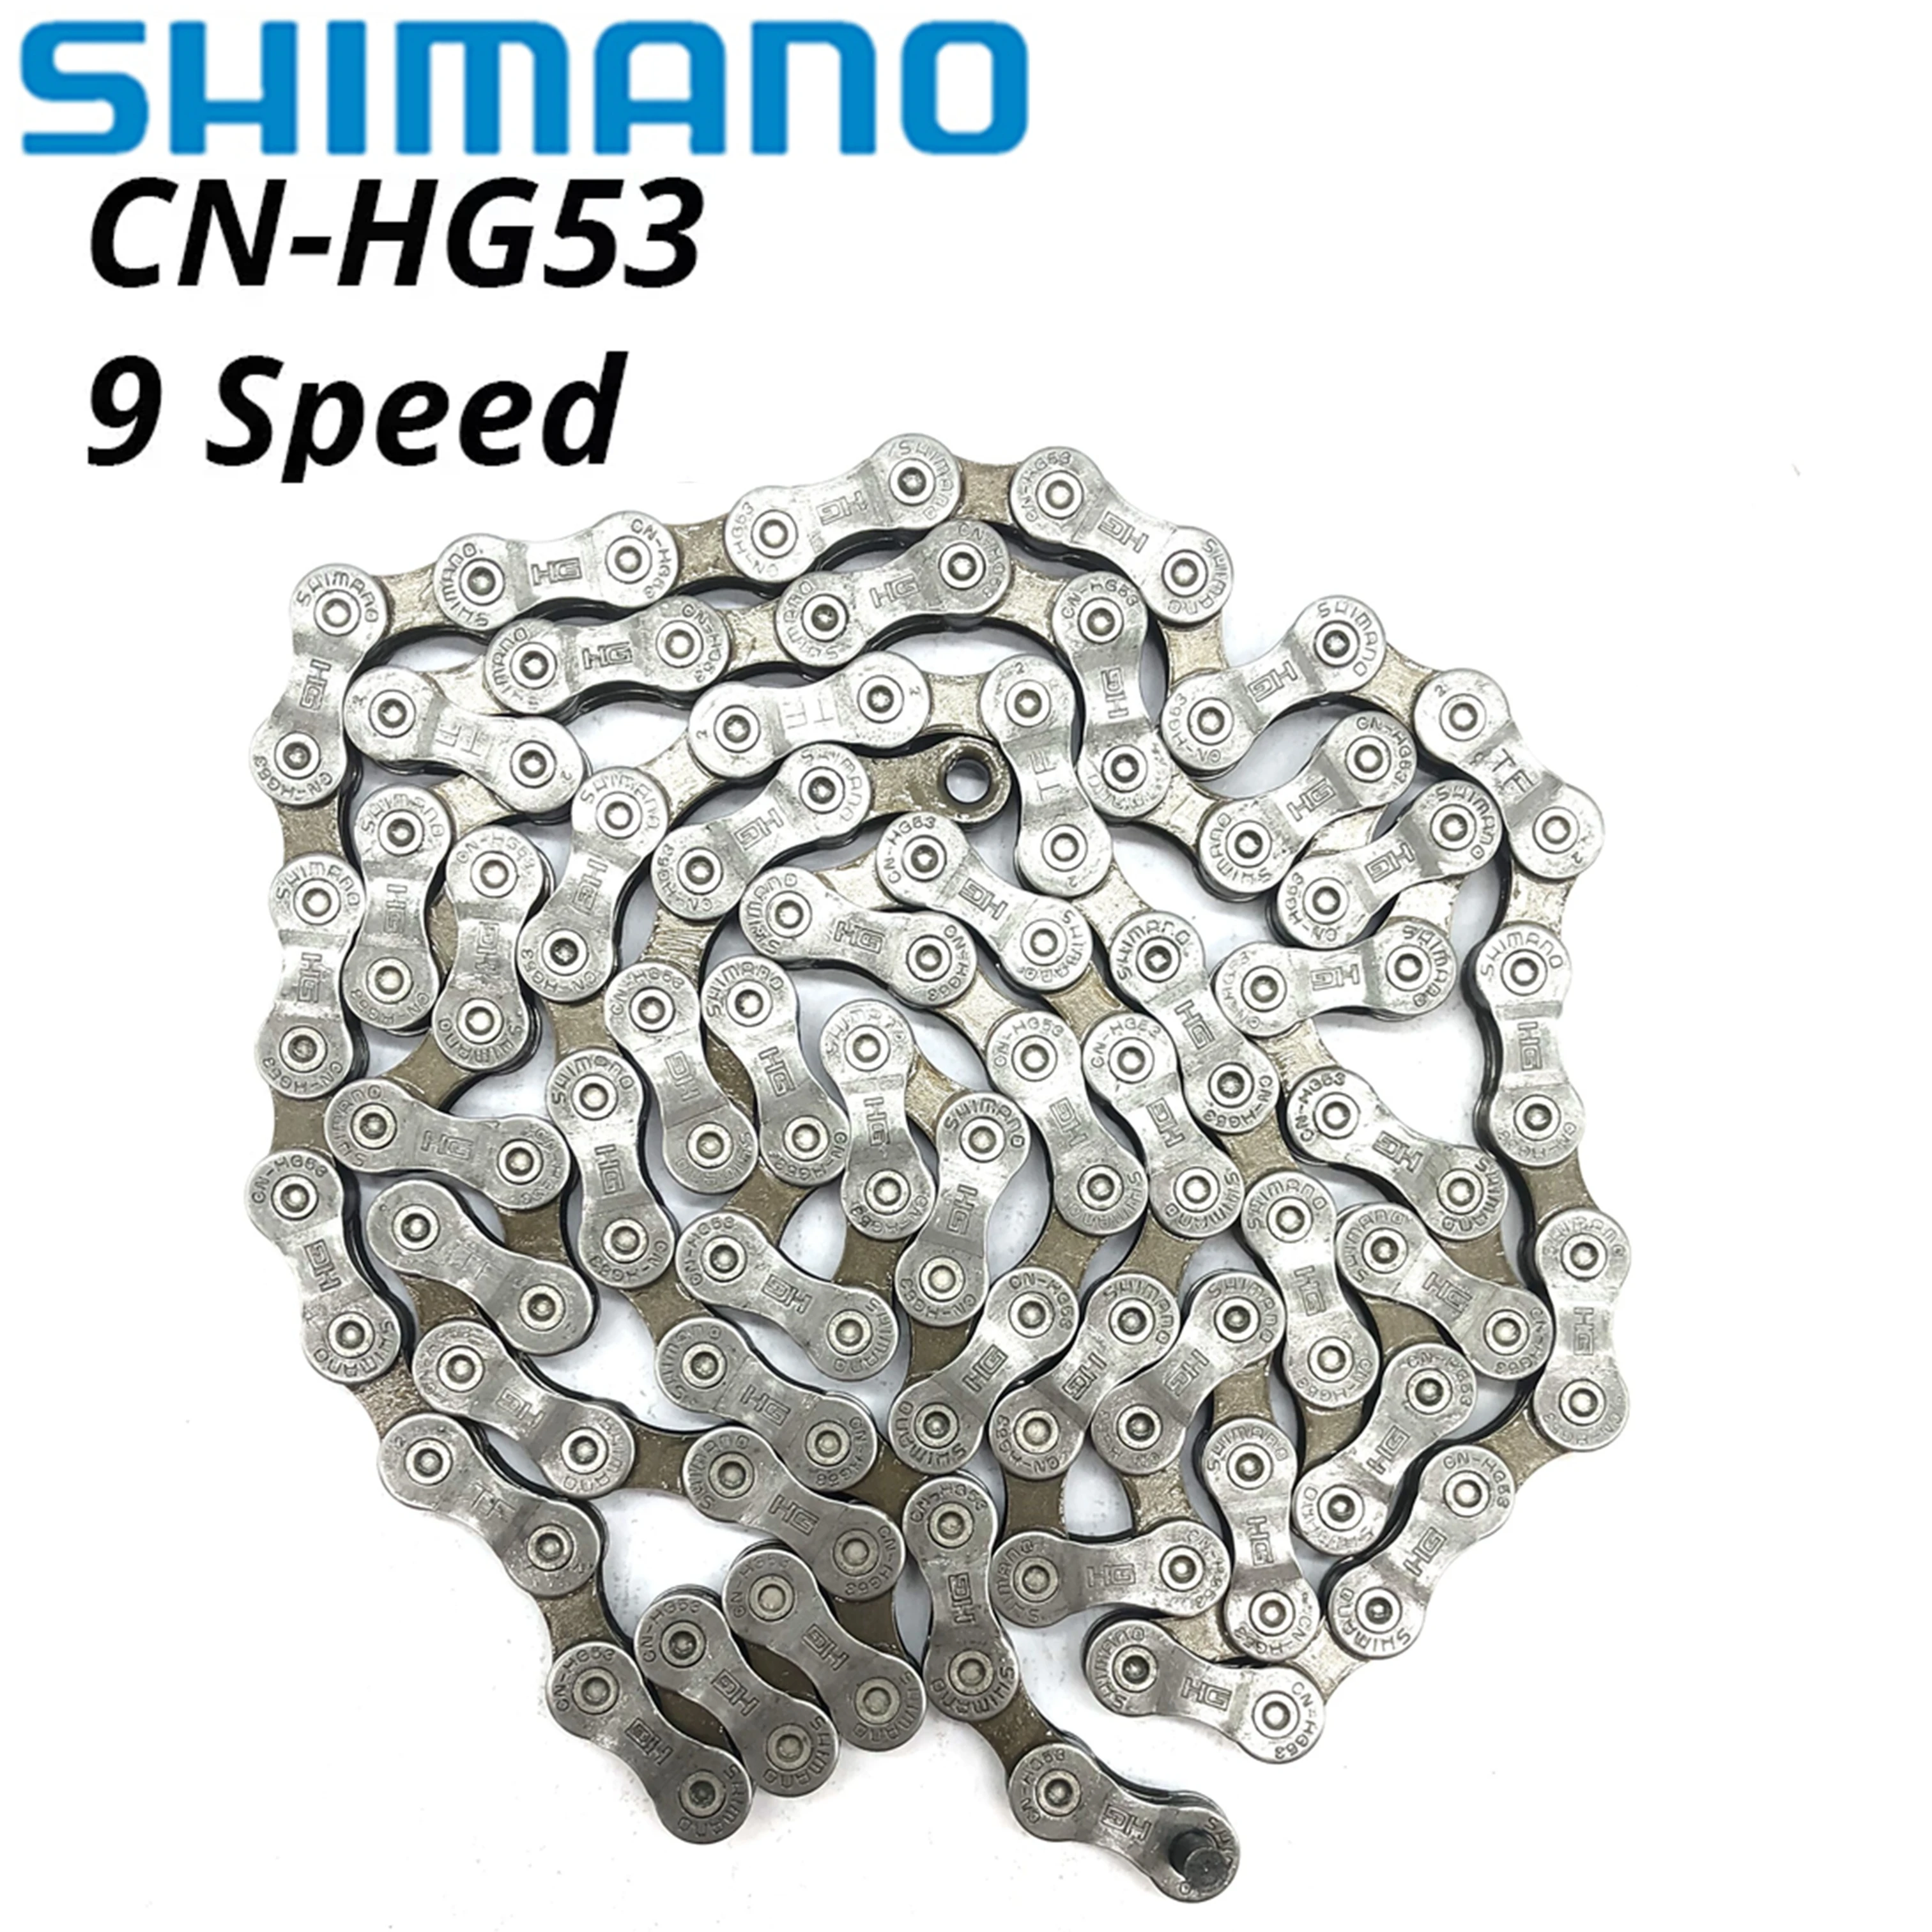 

Shimano Alivio HG53 9 Speed chains CN-HG53 Super Narrow HG Bicycle Bike Chain 9-speed 9S 112 links 112L